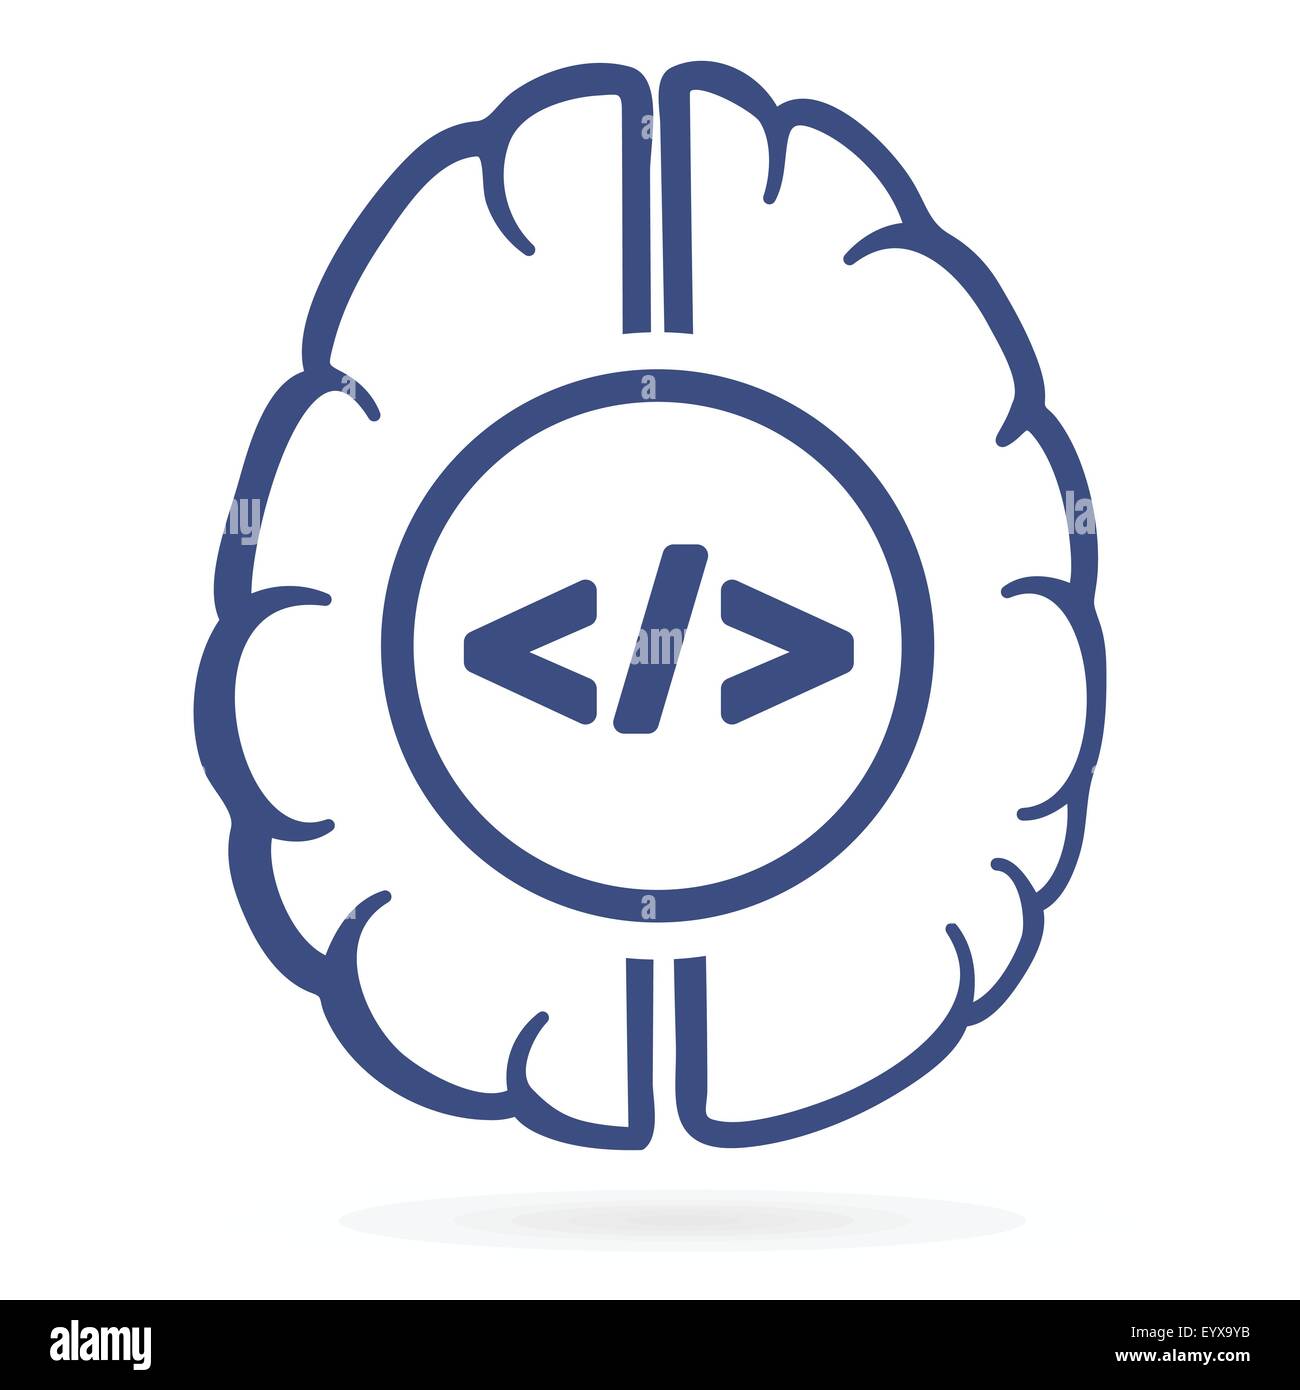 human brain and html tags inside vector illustration Stock Vector